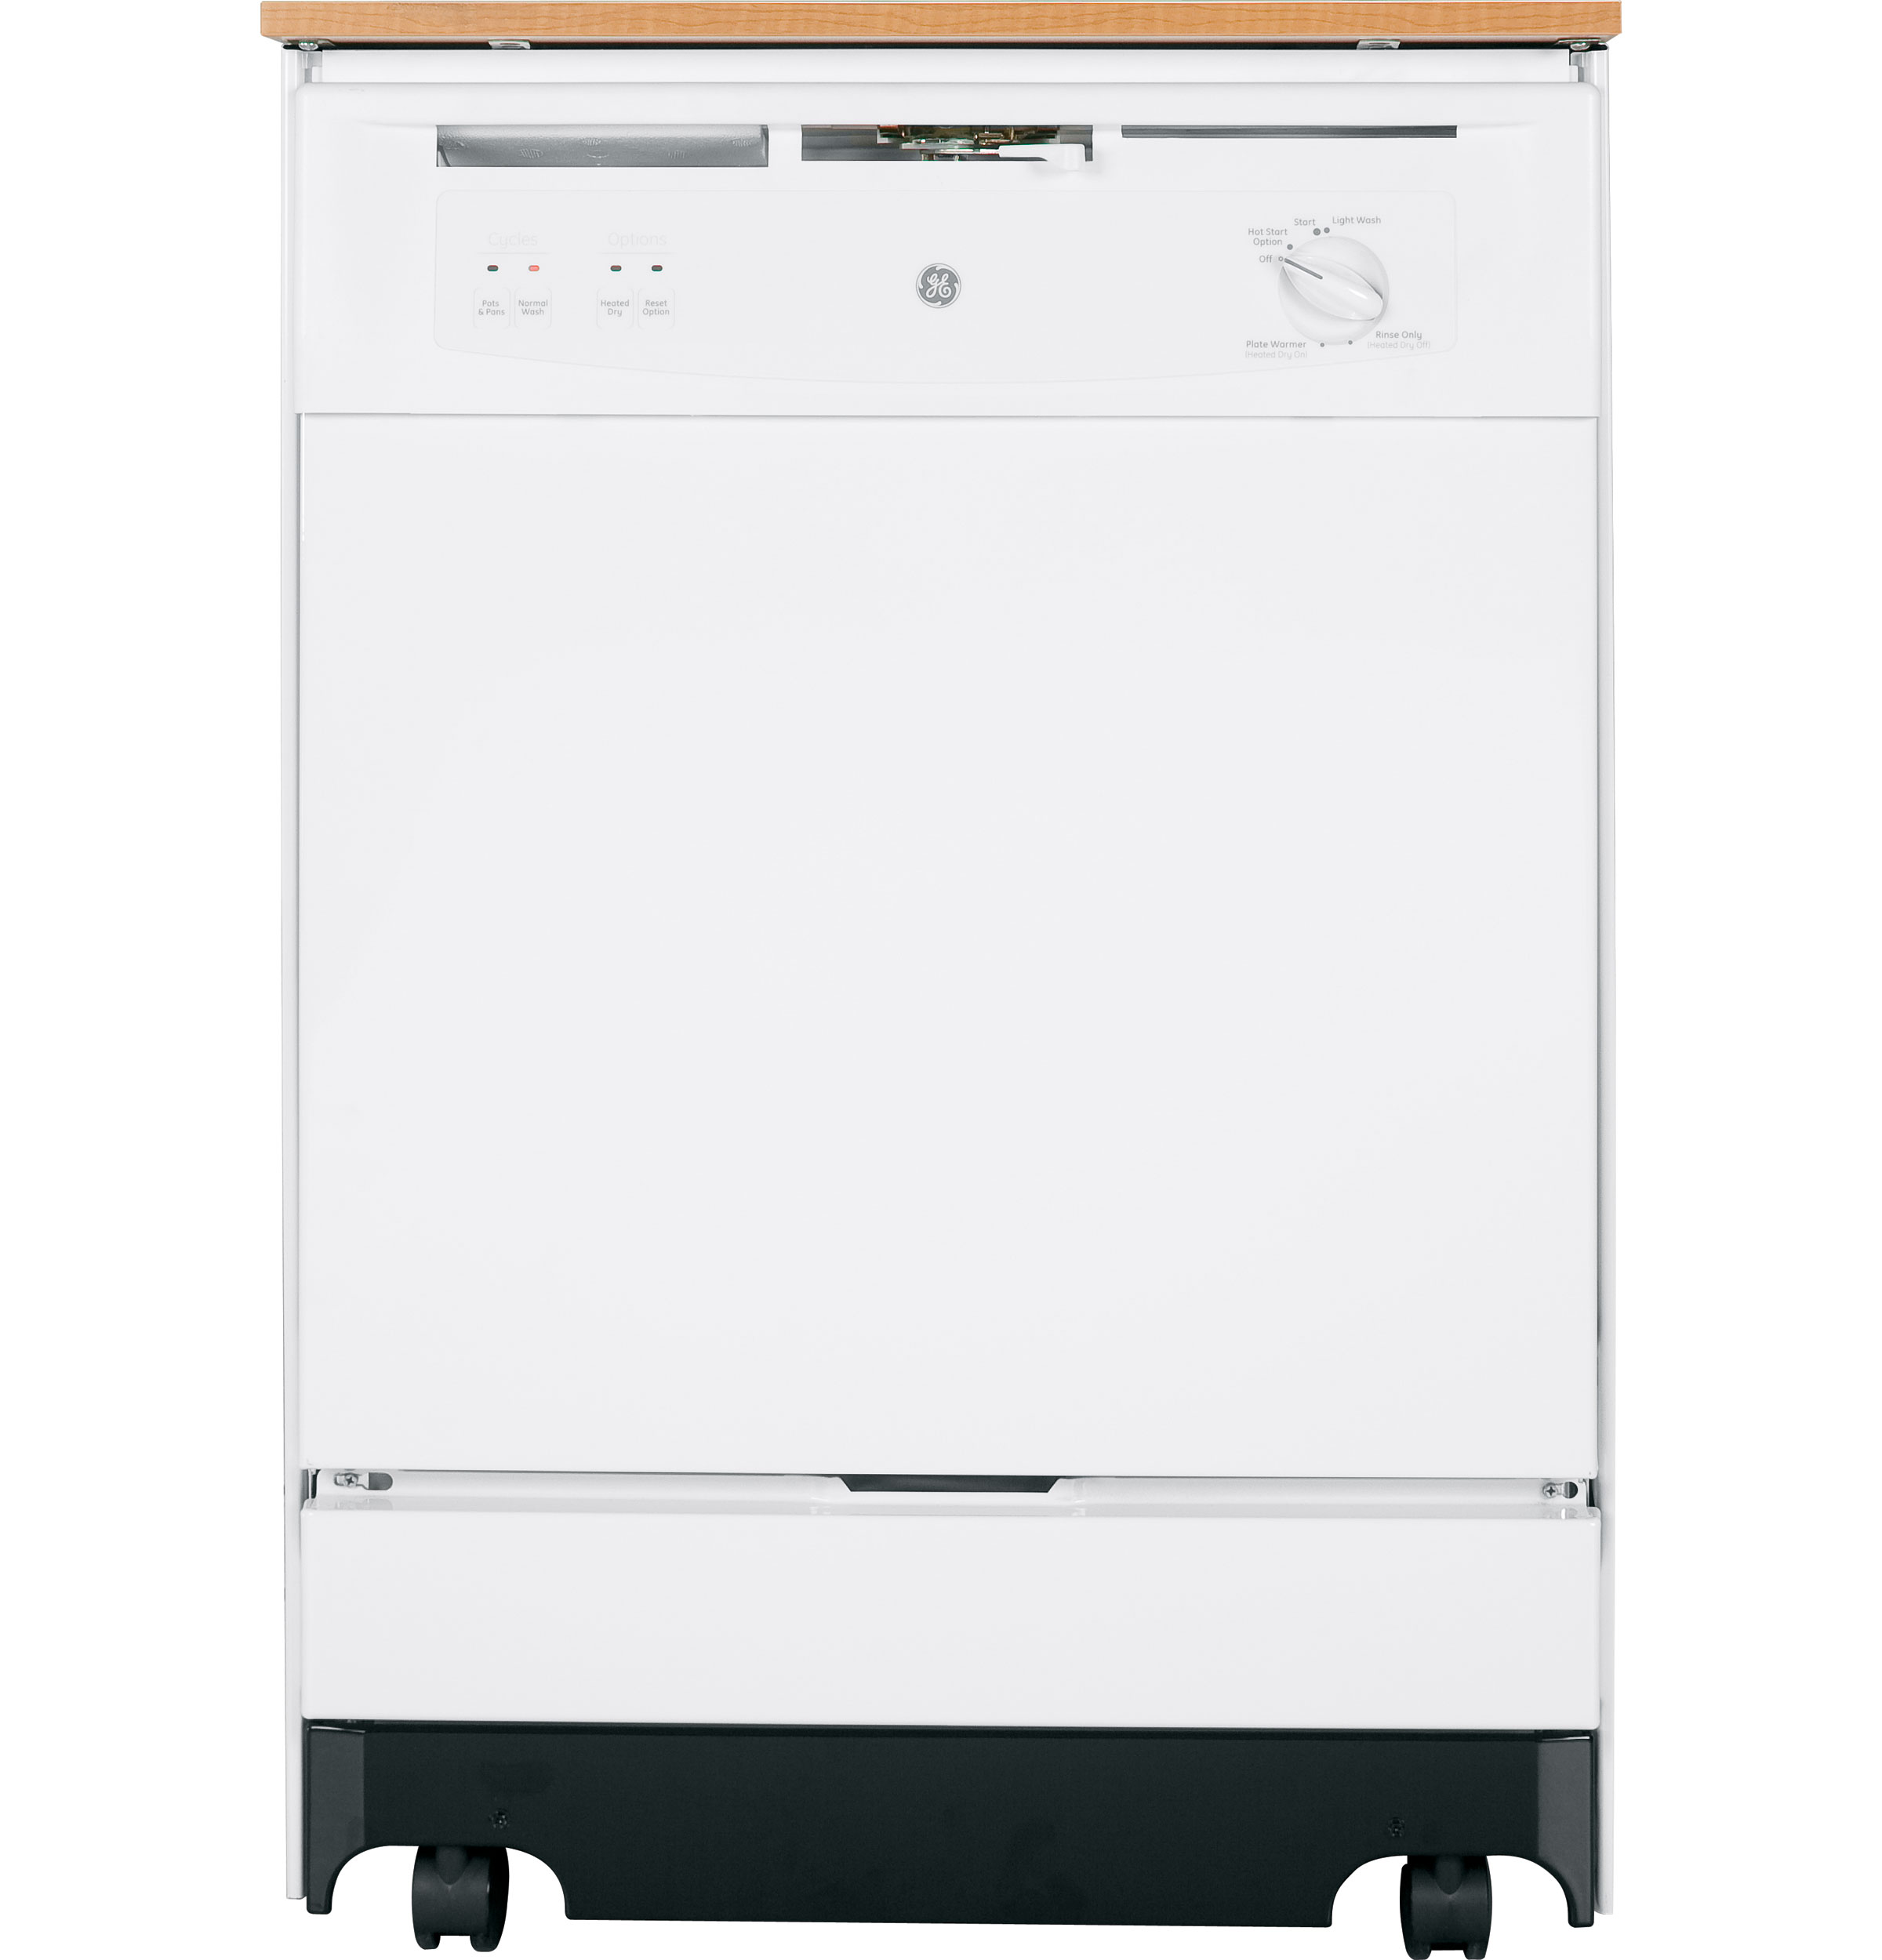 GE® ENERGY STAR® Convertible/Portable Dishwasher